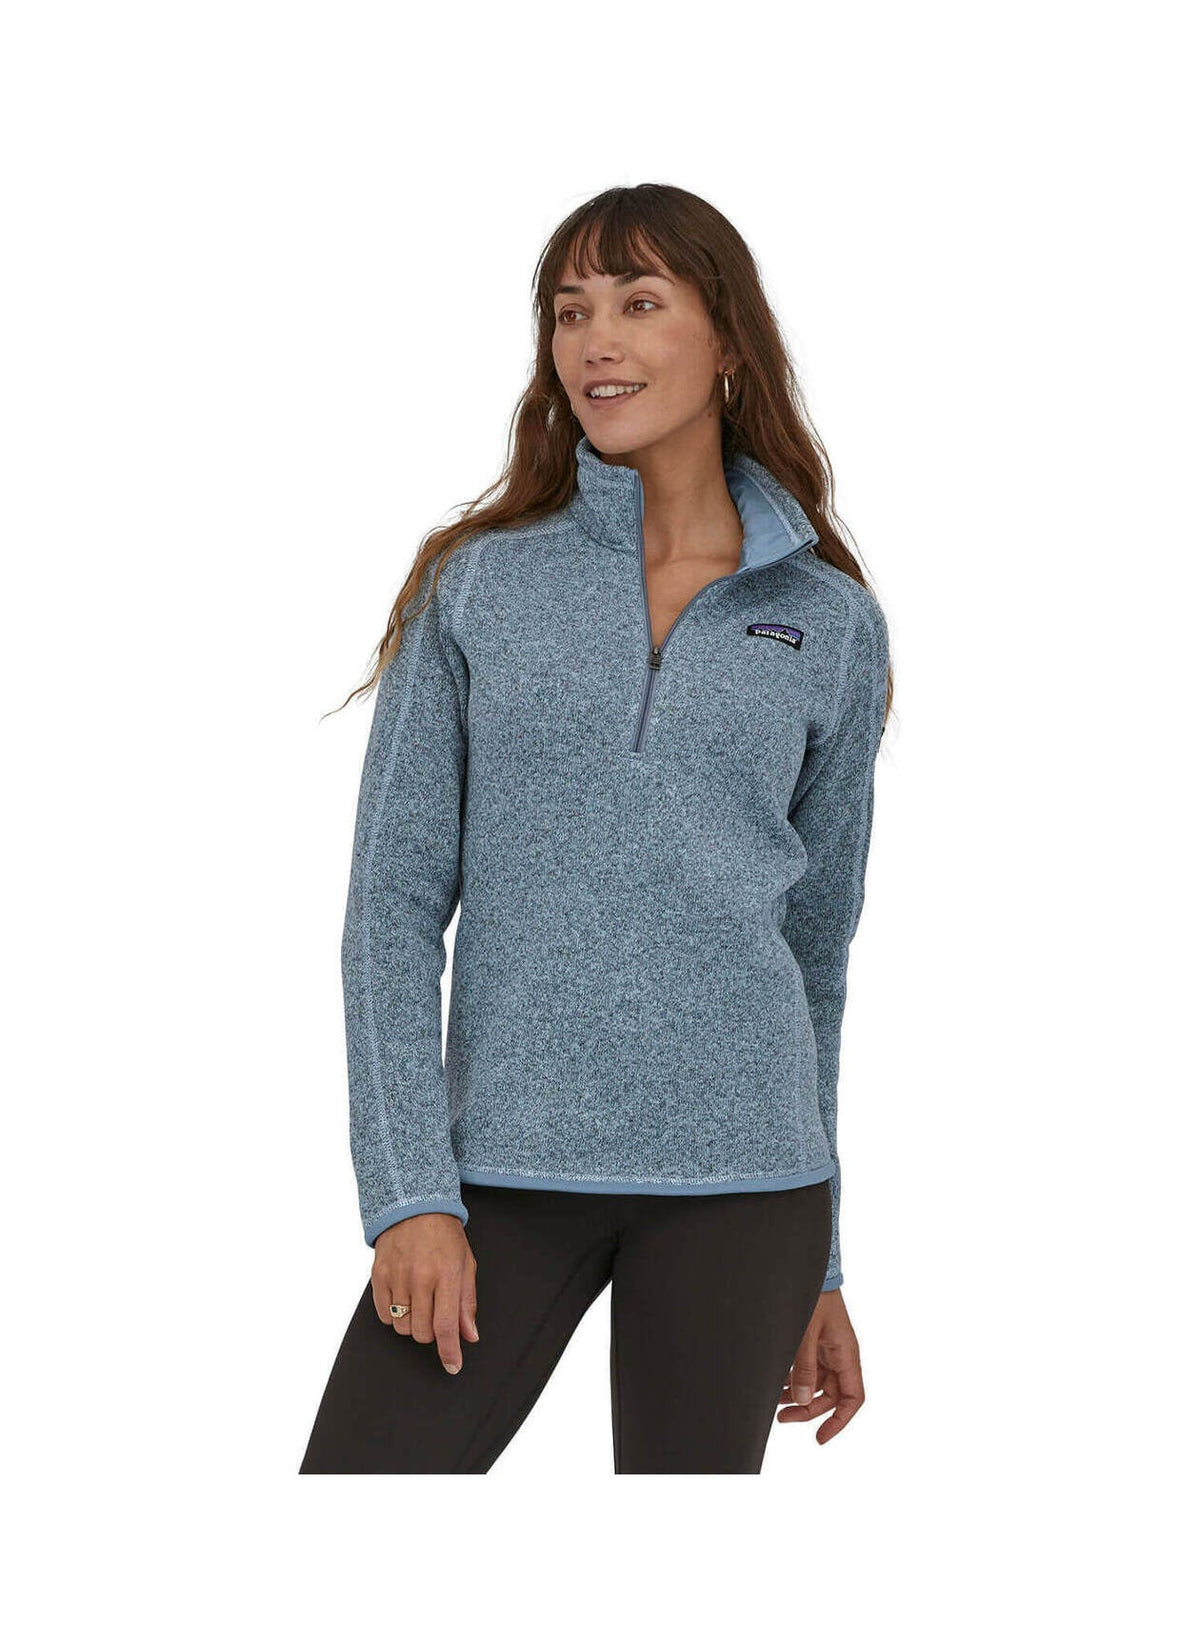 Patagonia Women's Better Sweater Quarter-Zip